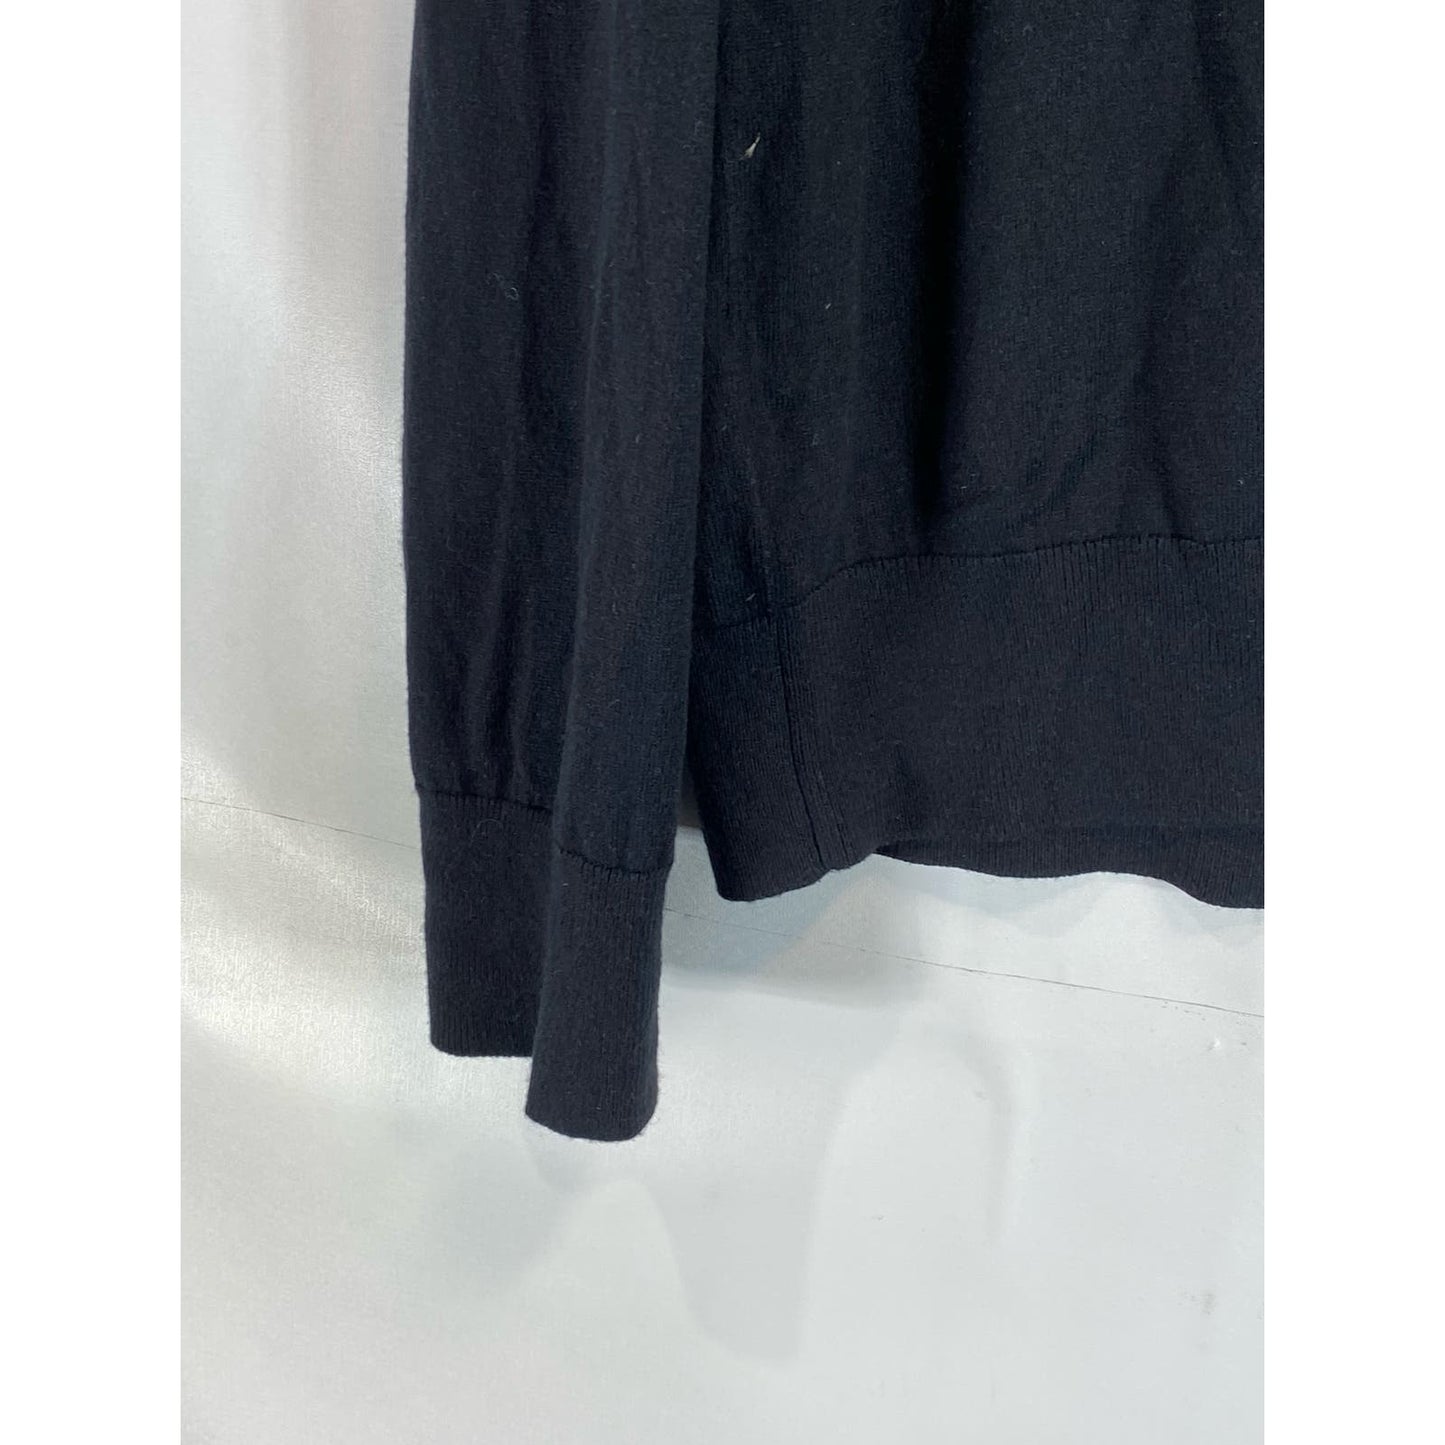 BANANA REPUBLIC Men's Black Solid V-Neck Luxury Blend Pullover Sweater SZ XL